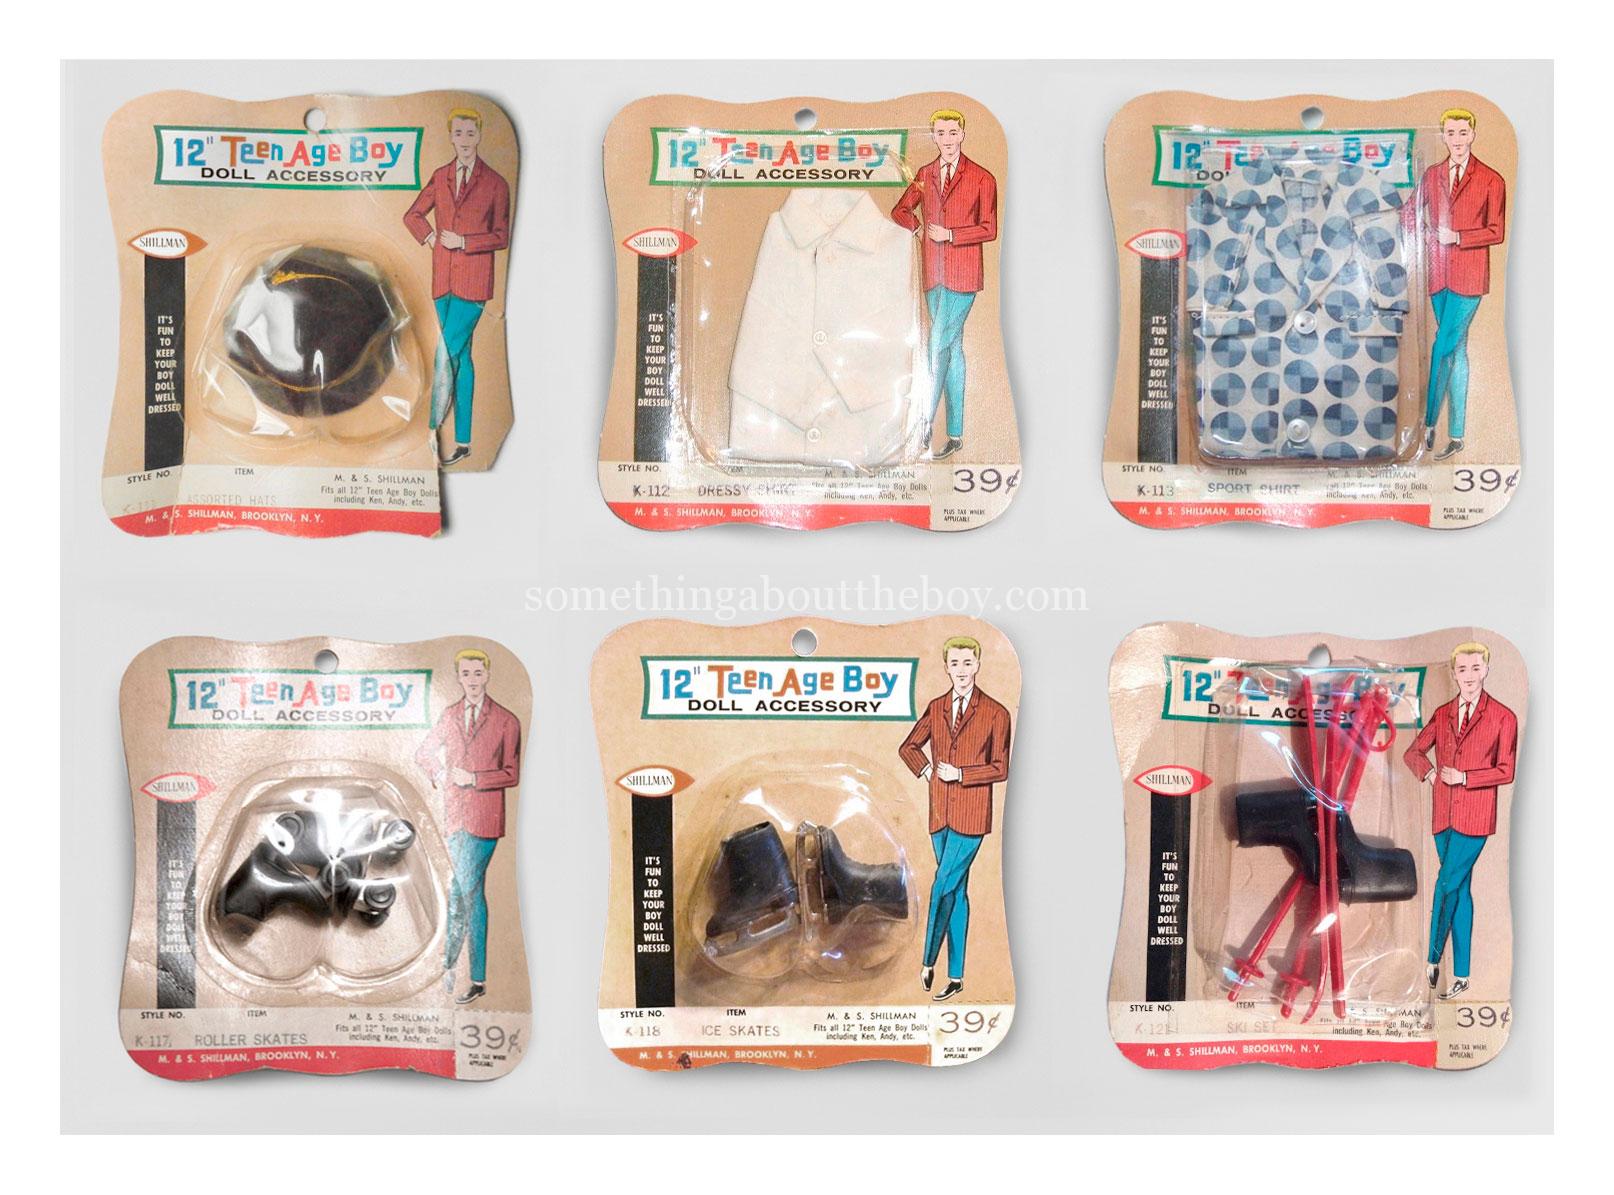 12" Teen Age Boy accessory sets by M&S Shillman